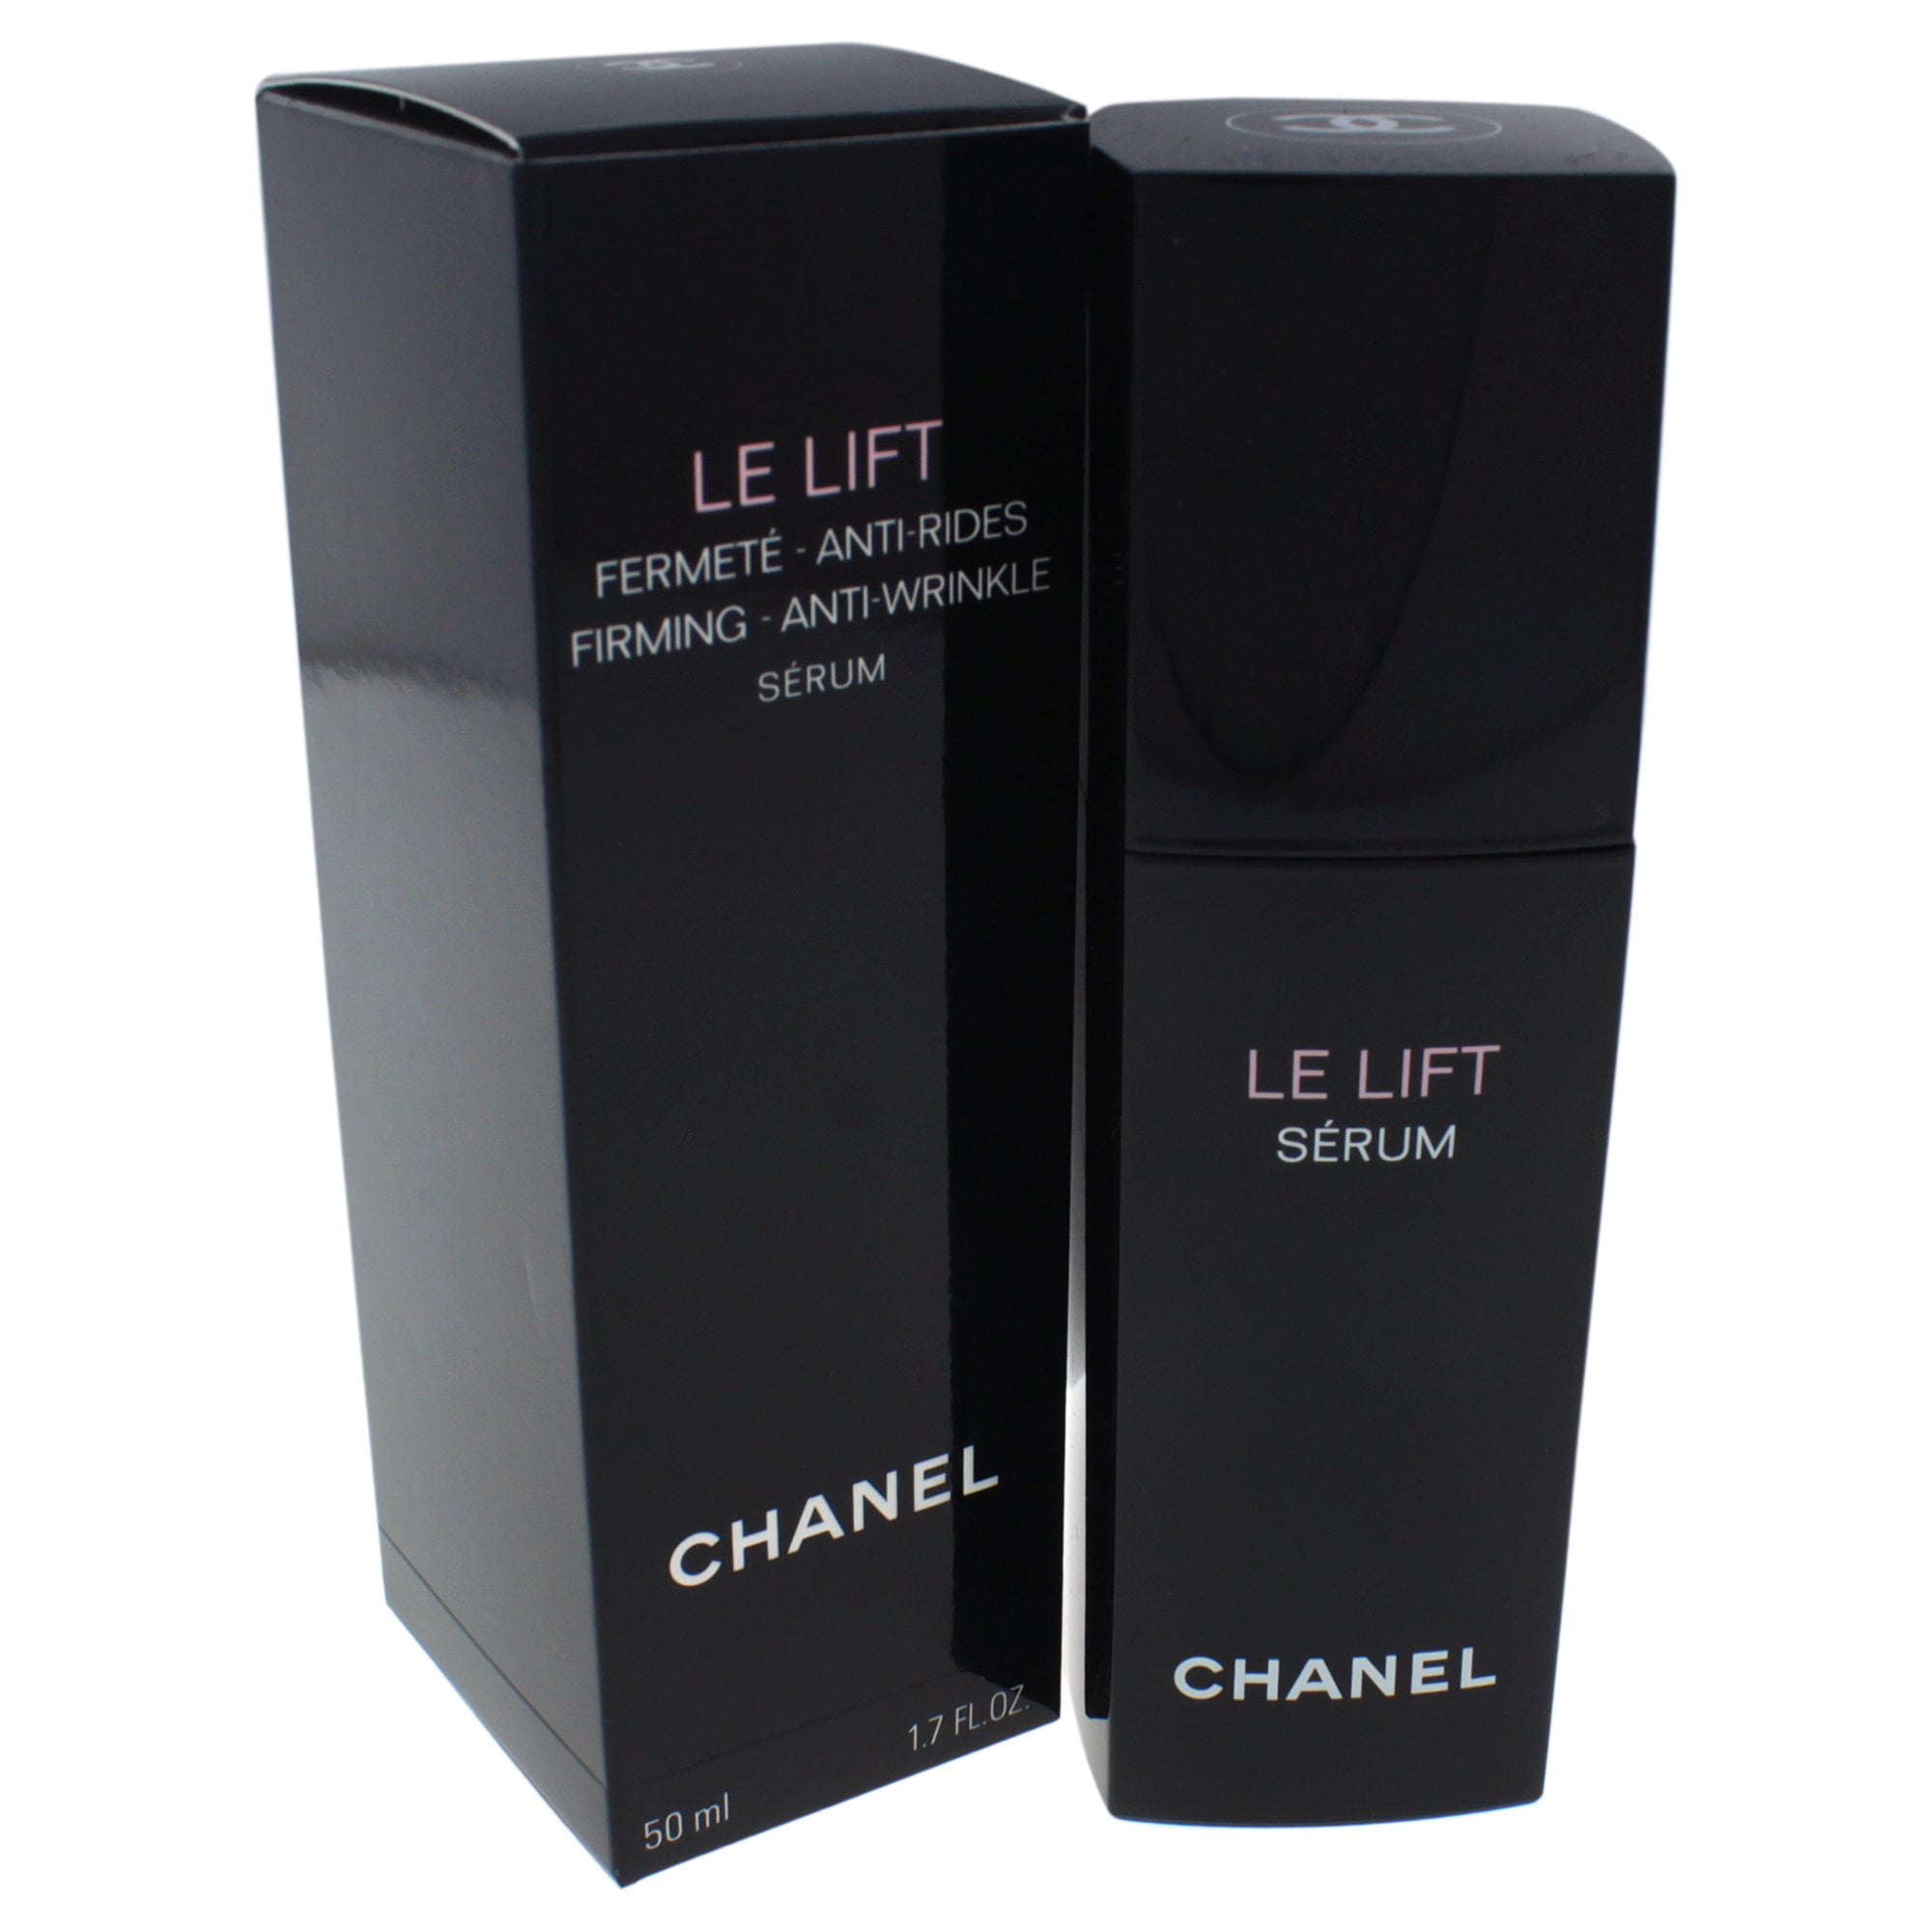 Chanel Le Lift Serum Sérum 50 ml 1.7oz - New Sealed Box Fresh